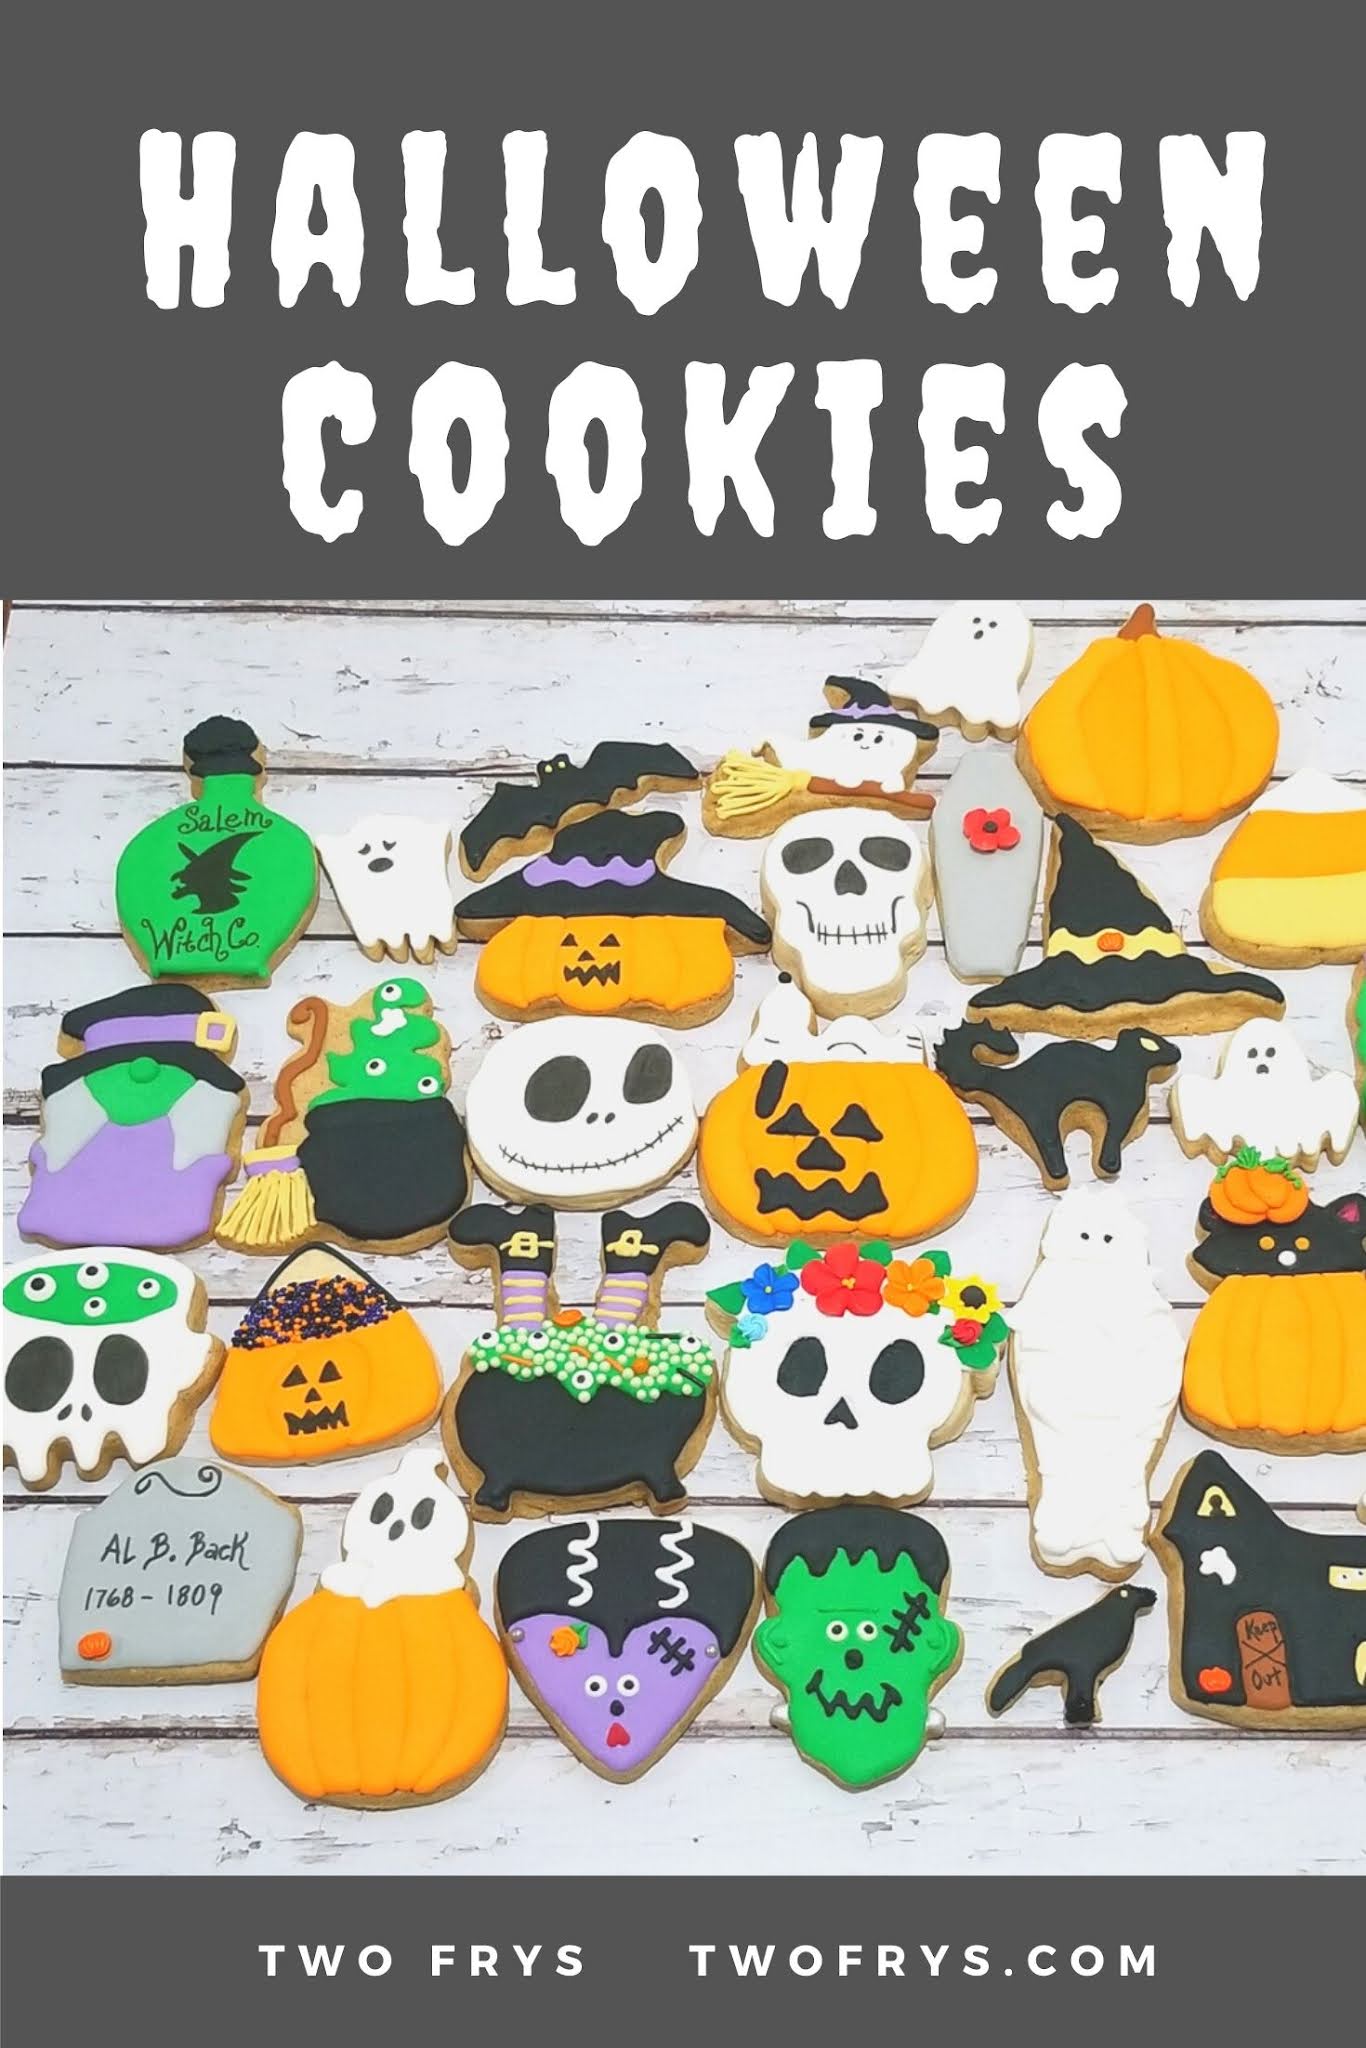 Two Frys: Halloween Cookies